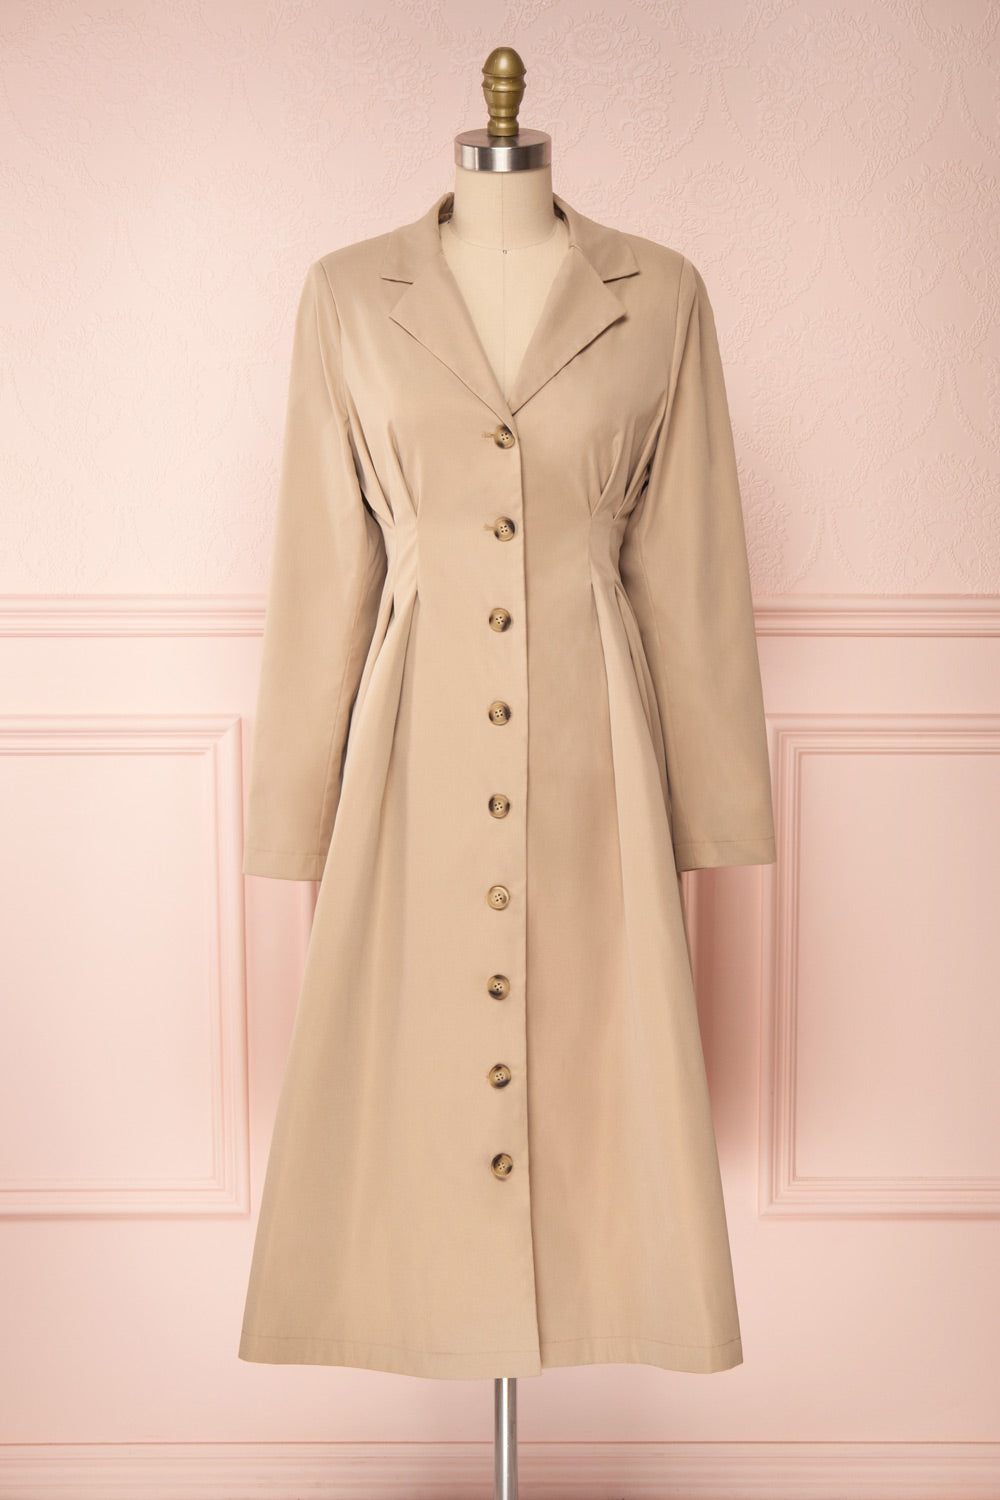 Maribelle Beige Long Sleeved Trench Coat | Boutique 1861 bottom